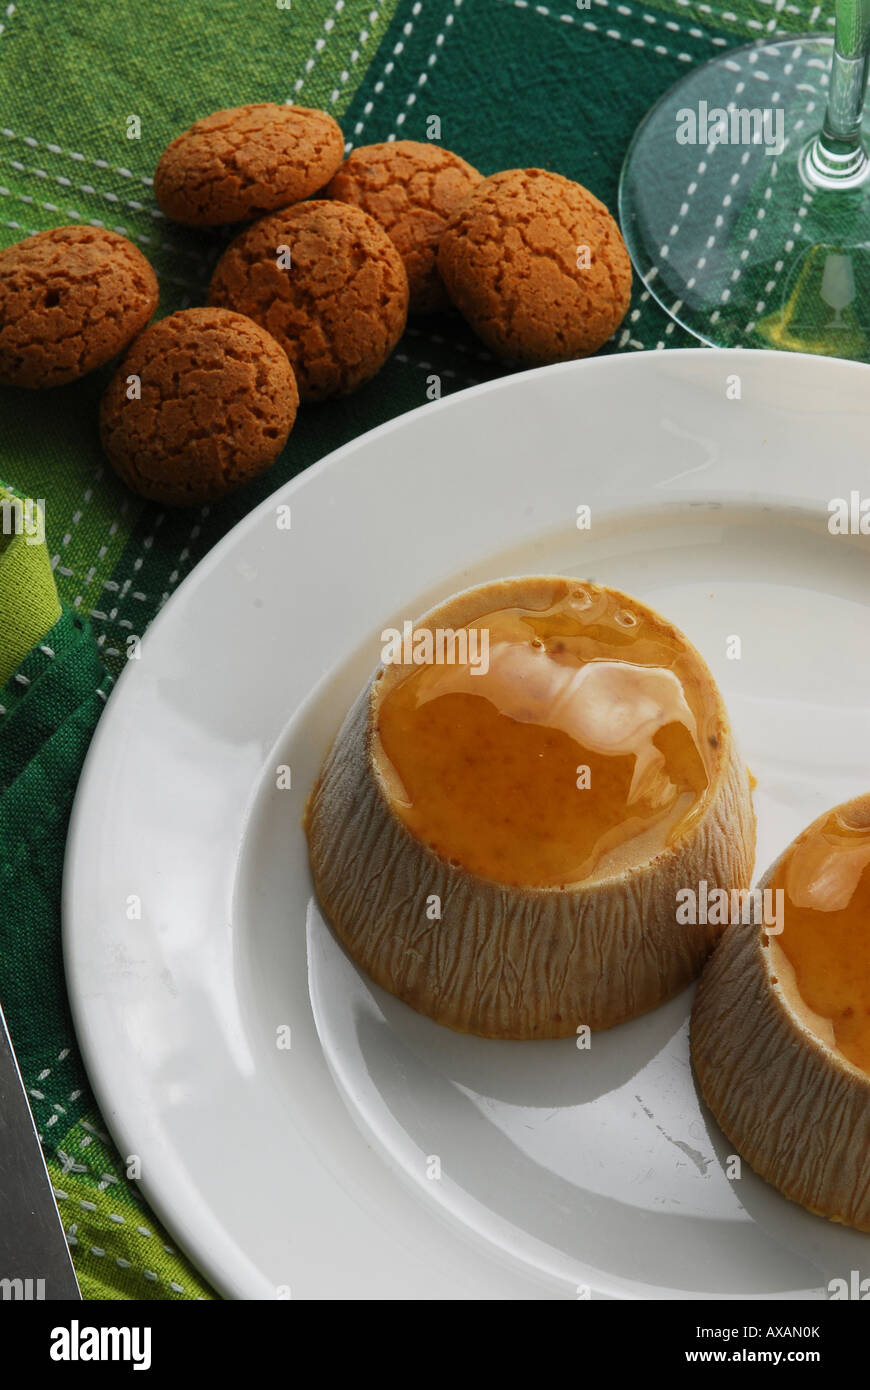 Pudding with macaroons - Budino agli amaretti - Emiglia Romagna - Italian kitchen Stock Photo